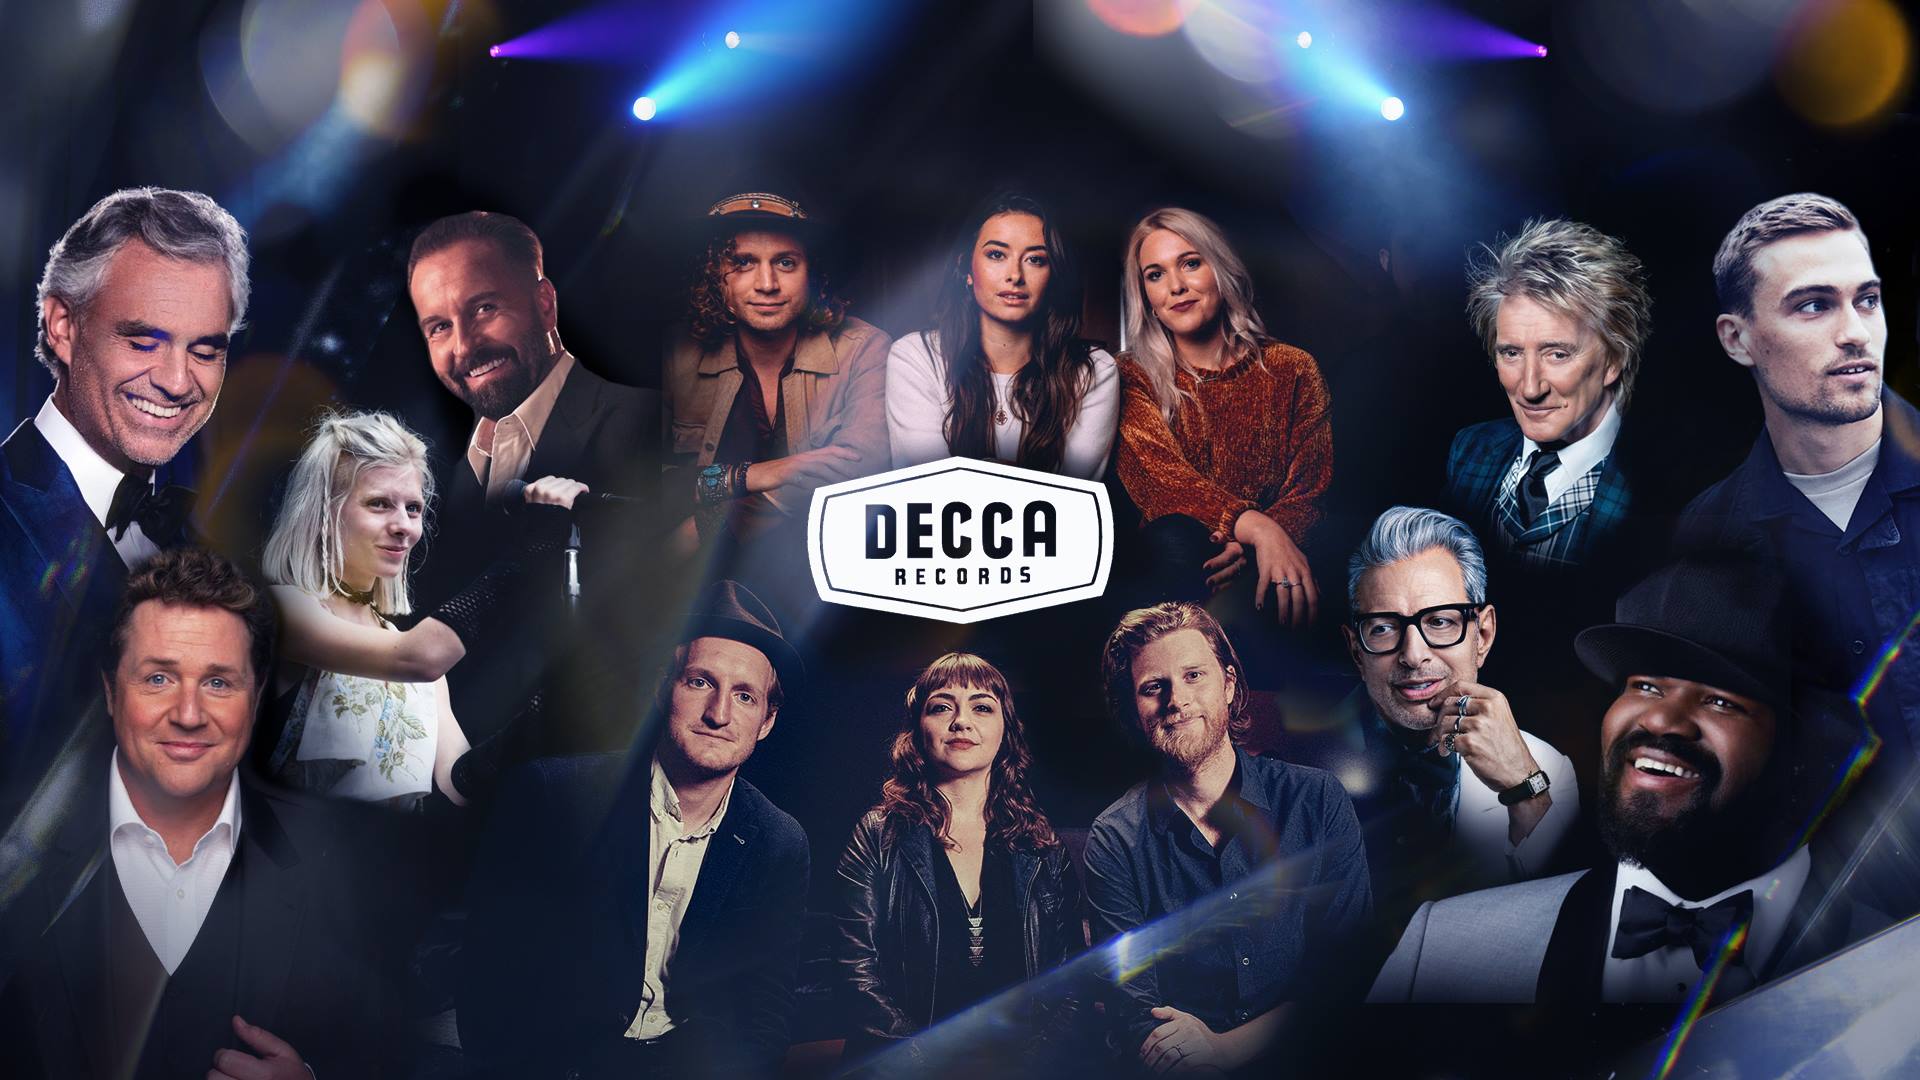 Australia part of Decca’s 90th anniversary celebrations